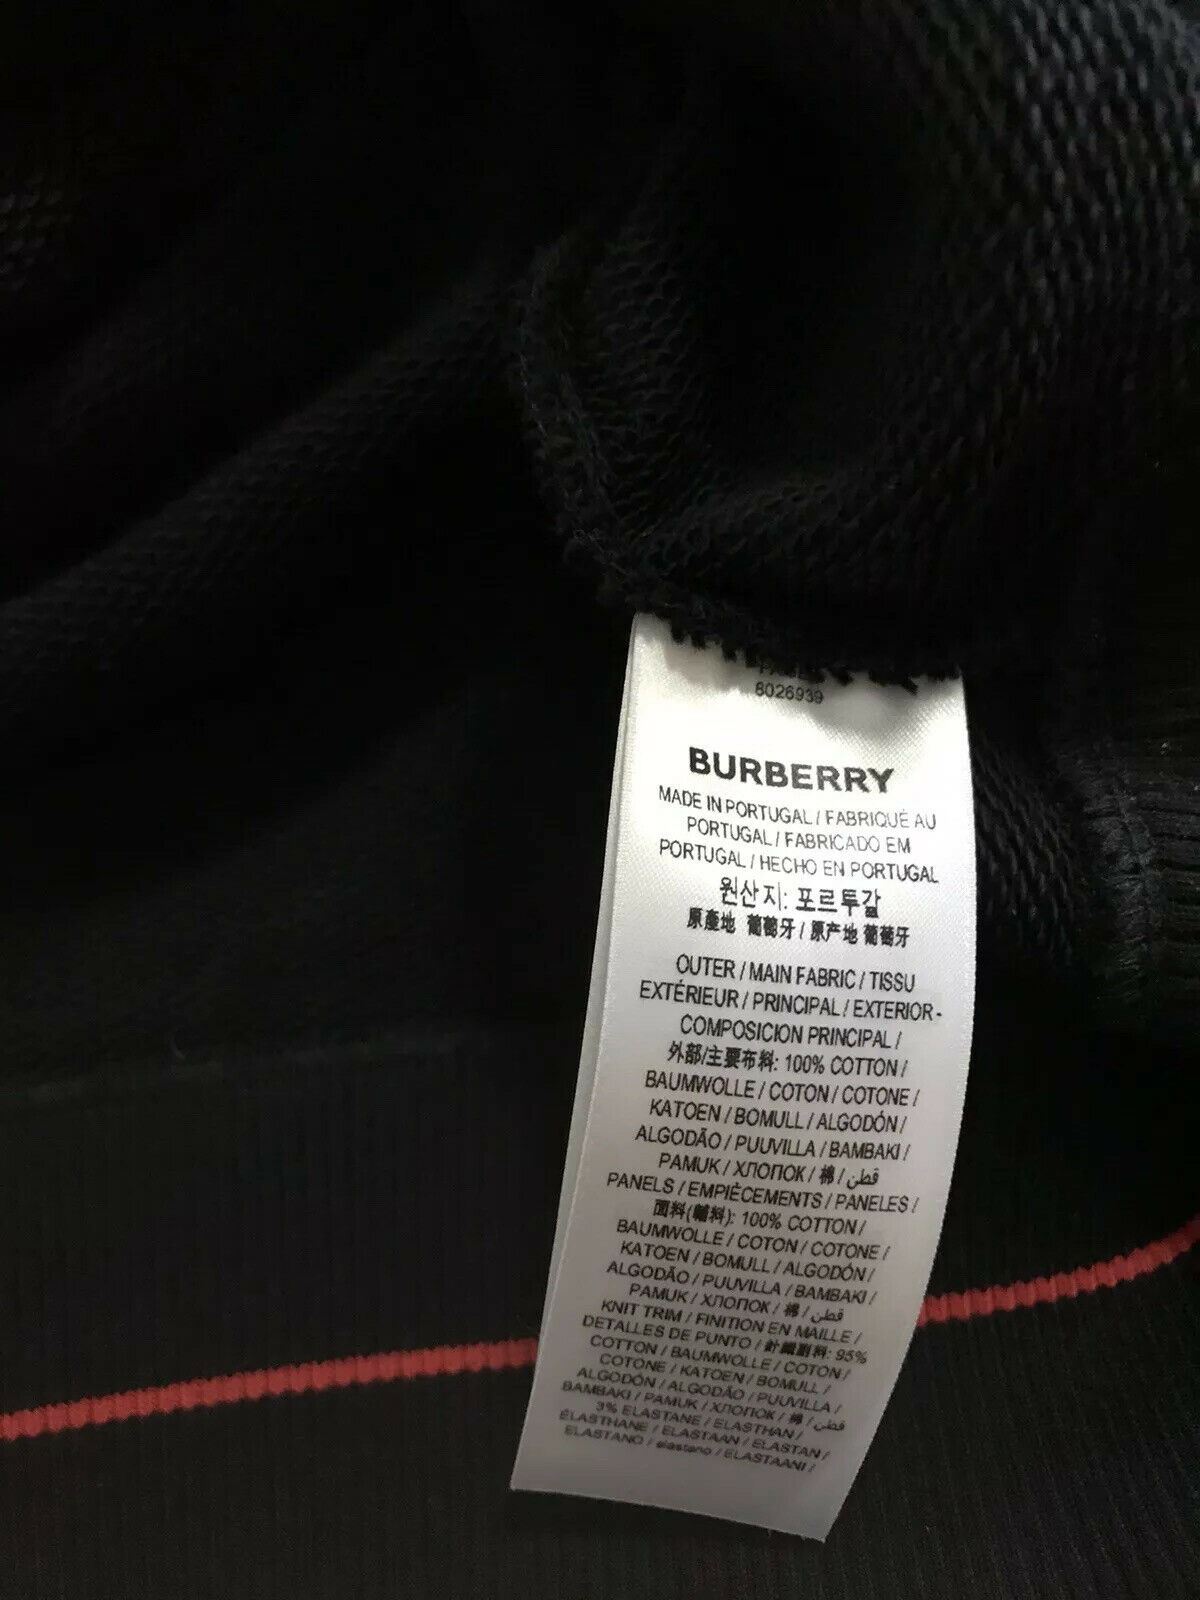 Neu $650 Burberry Men Solid Sweatshirt With TB Mon Pullover Crewneck Black L